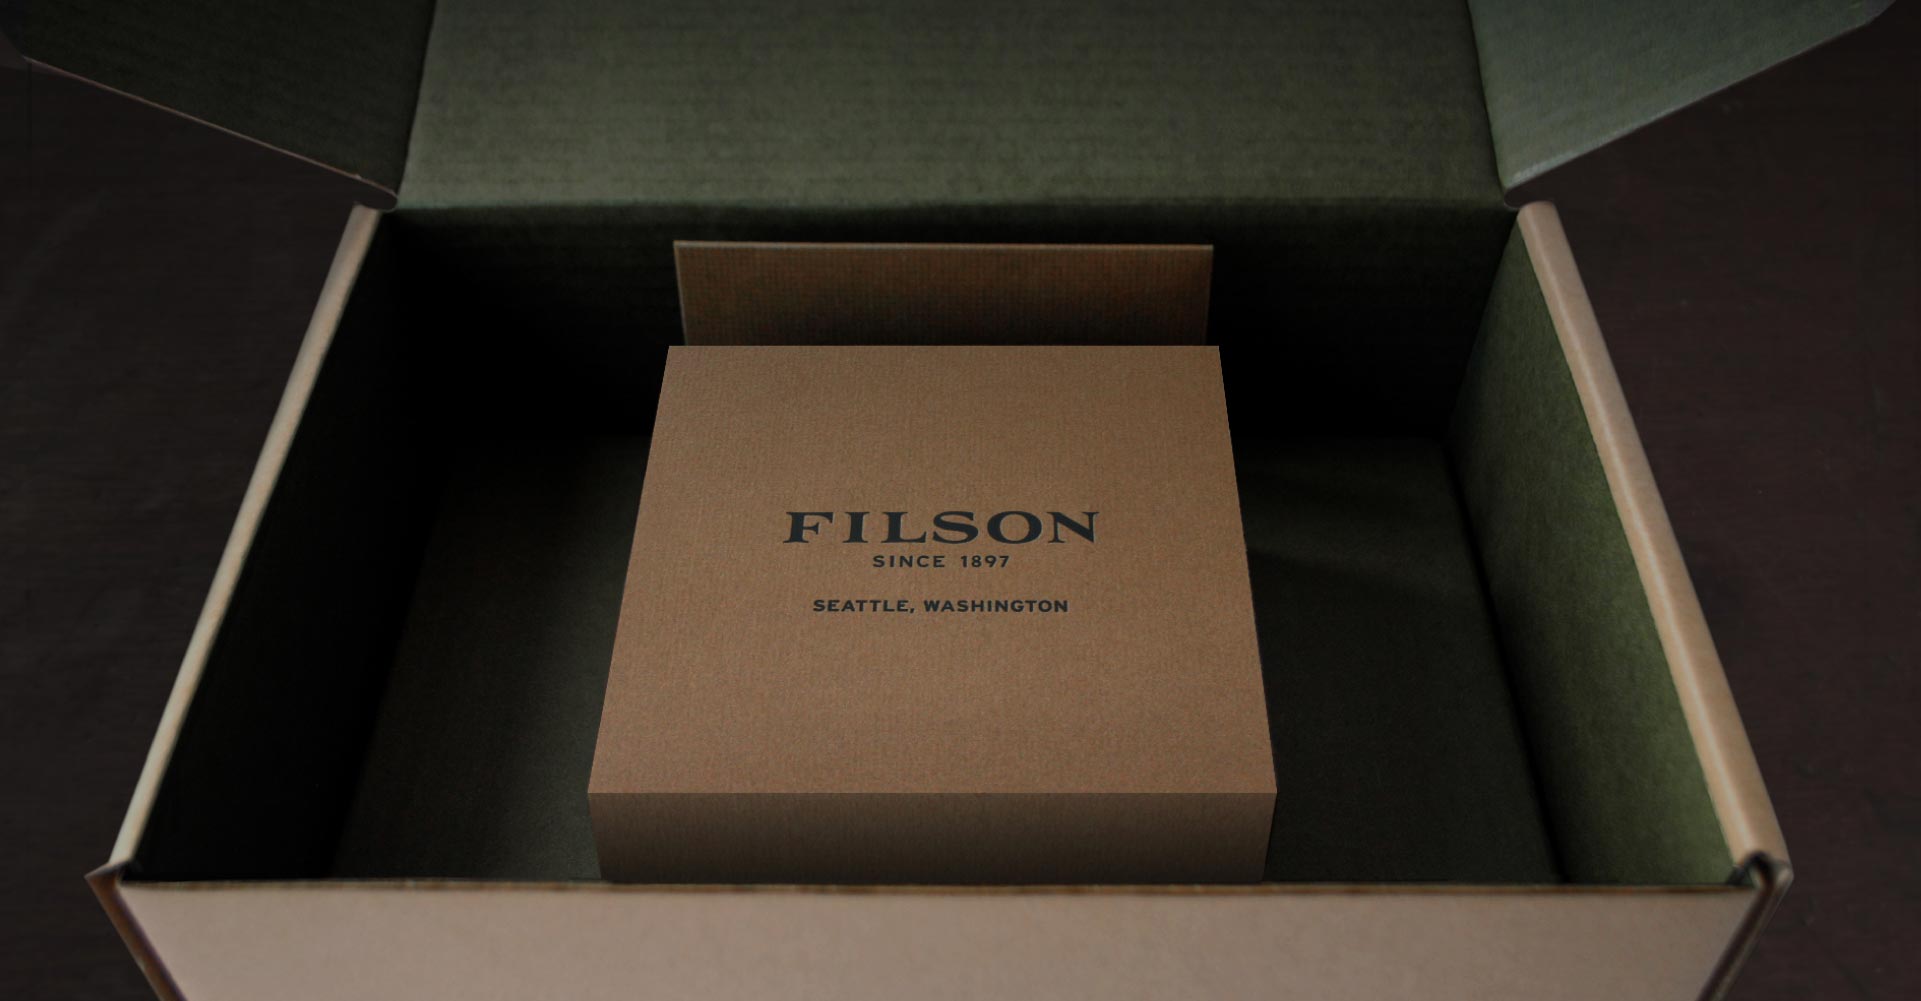 Client FILSON Partnered for Complete Custom Packaging Solution